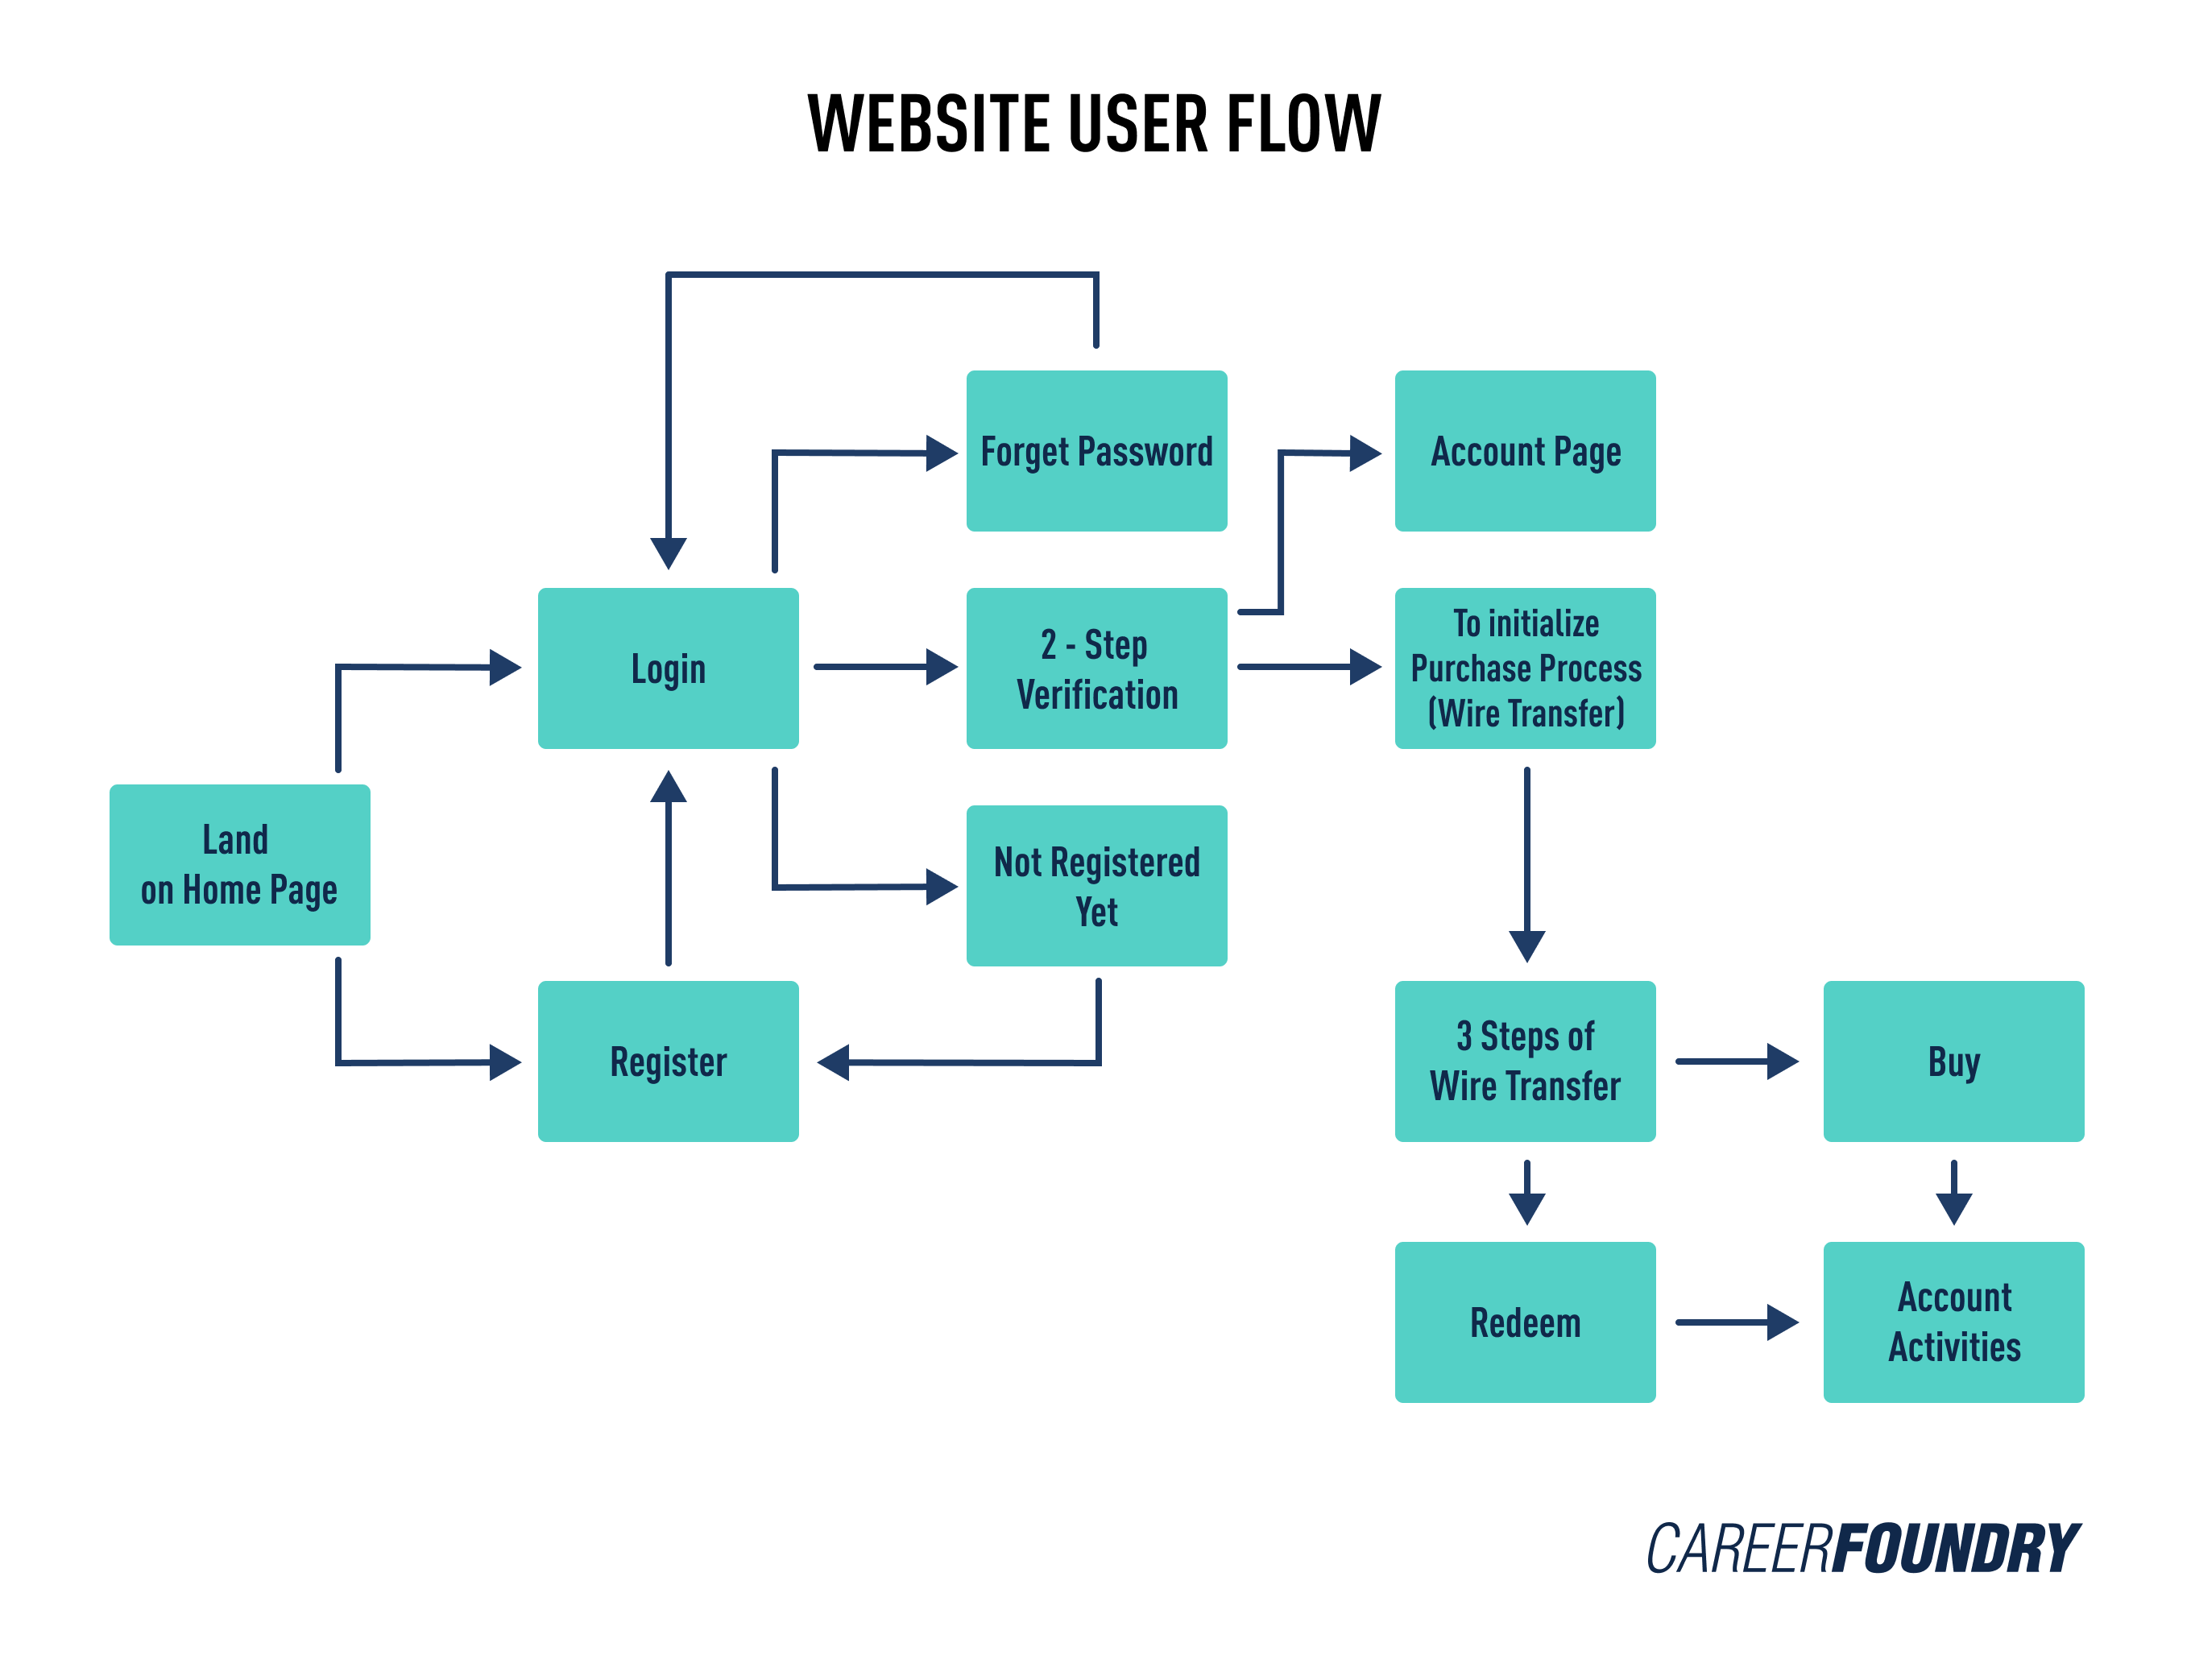 A product management website user flow chart.